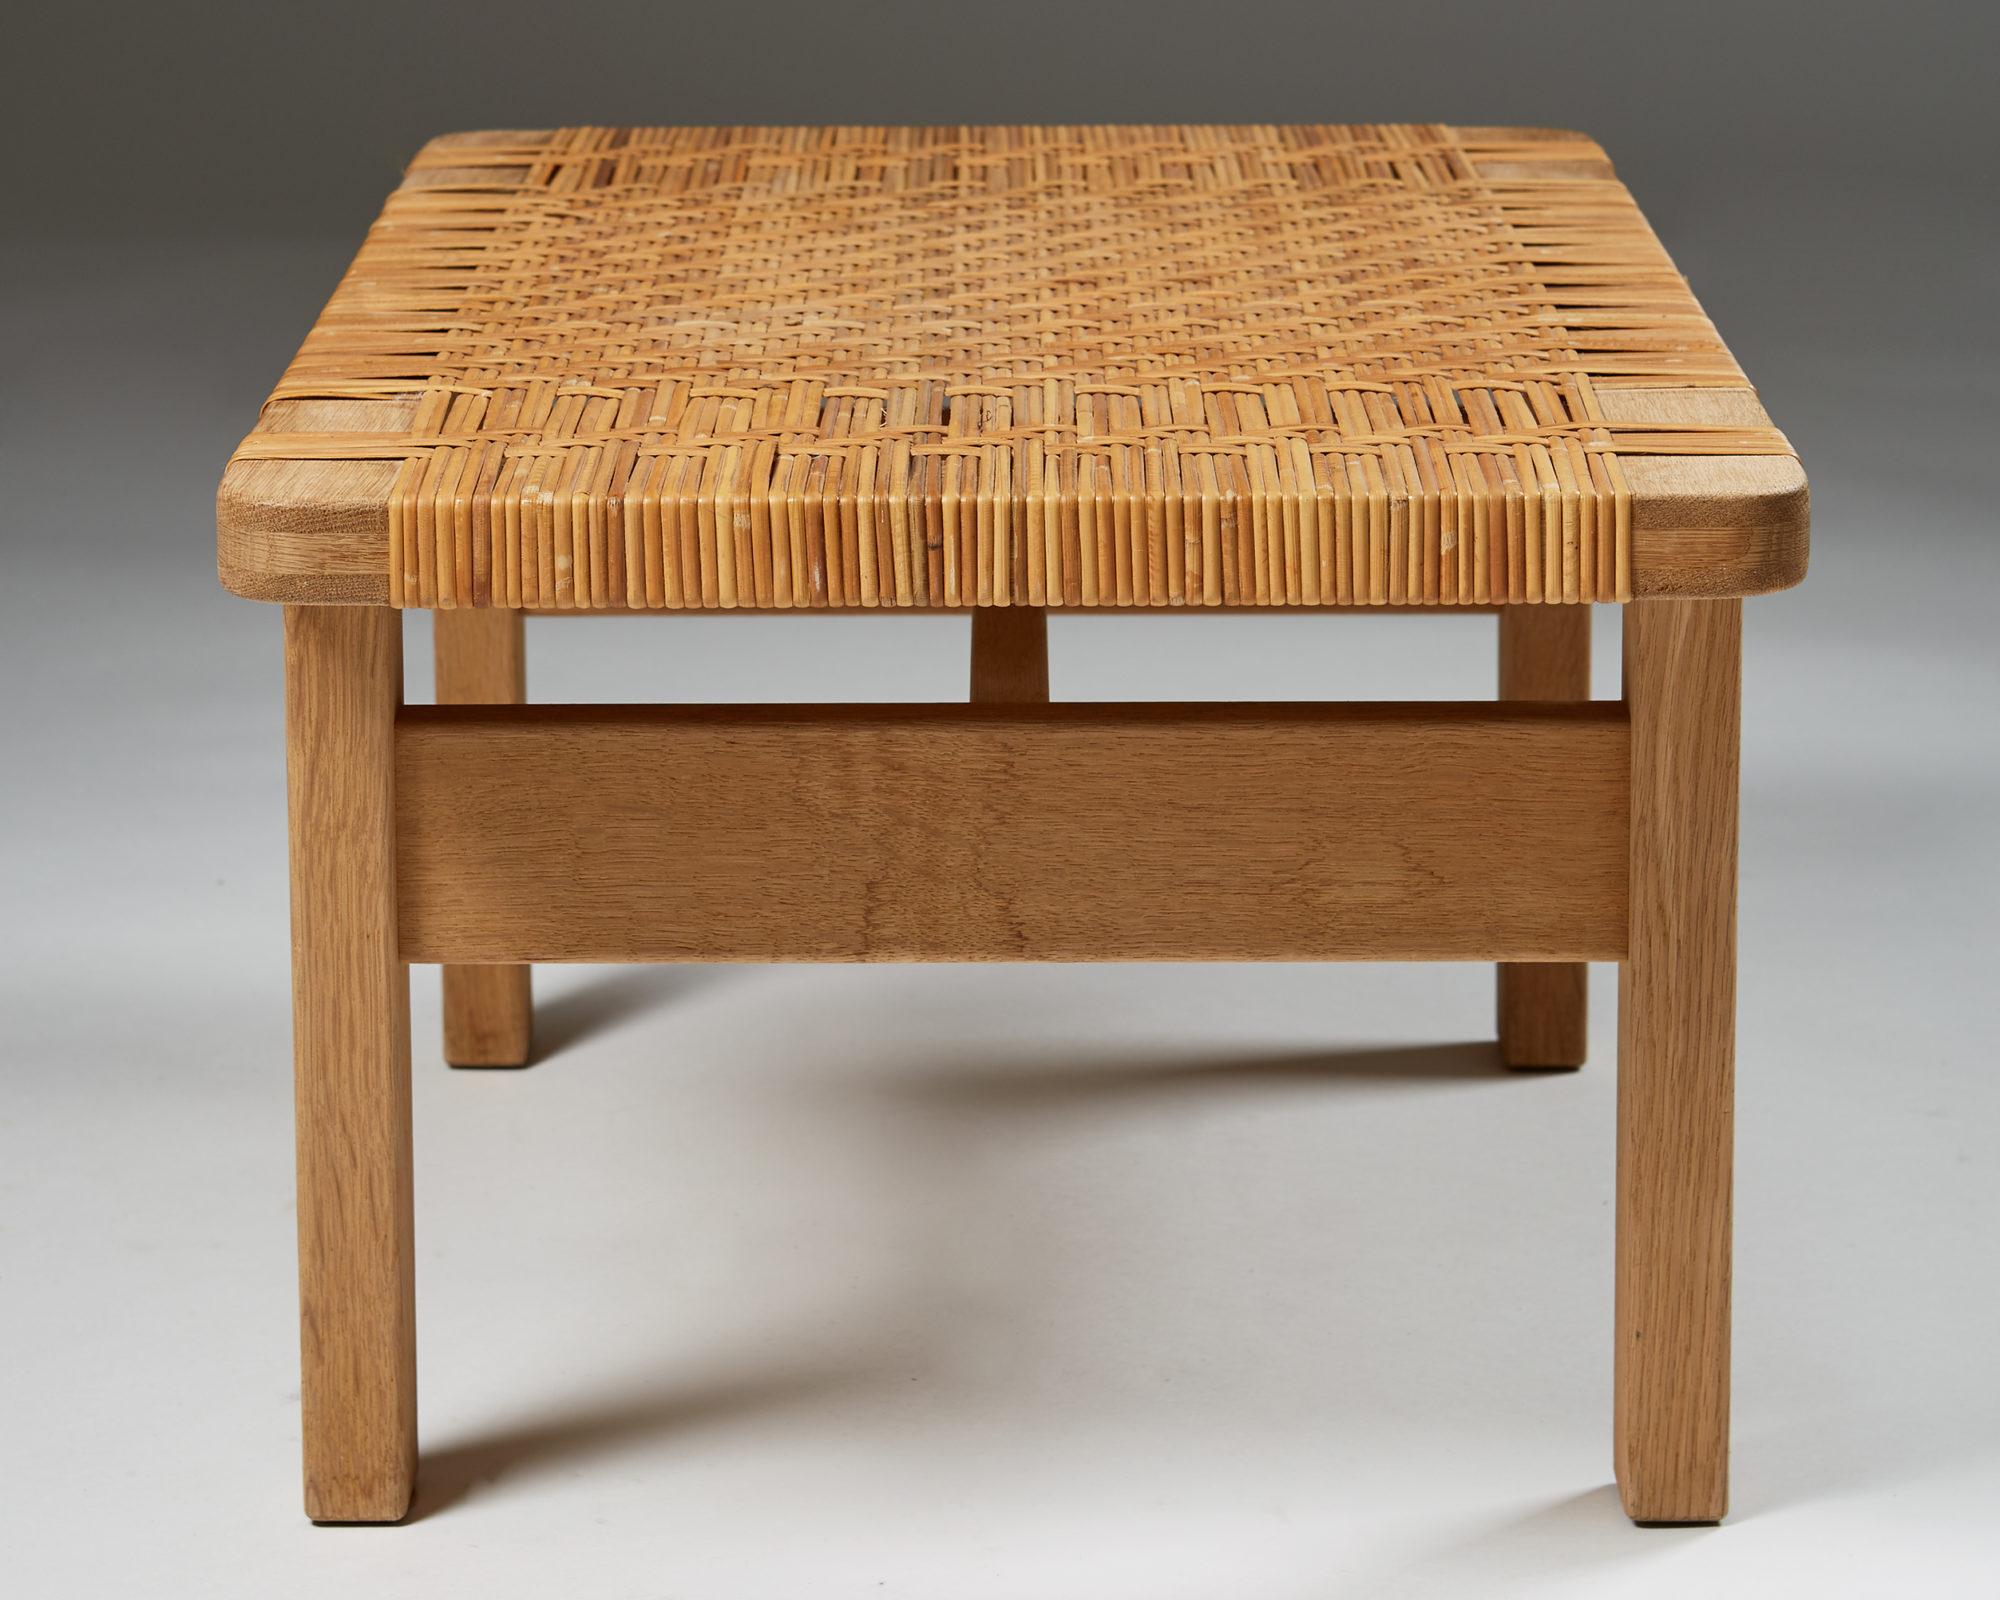 Scandinavian Modern Occasional Table or Bench designed by Börge Mogensen